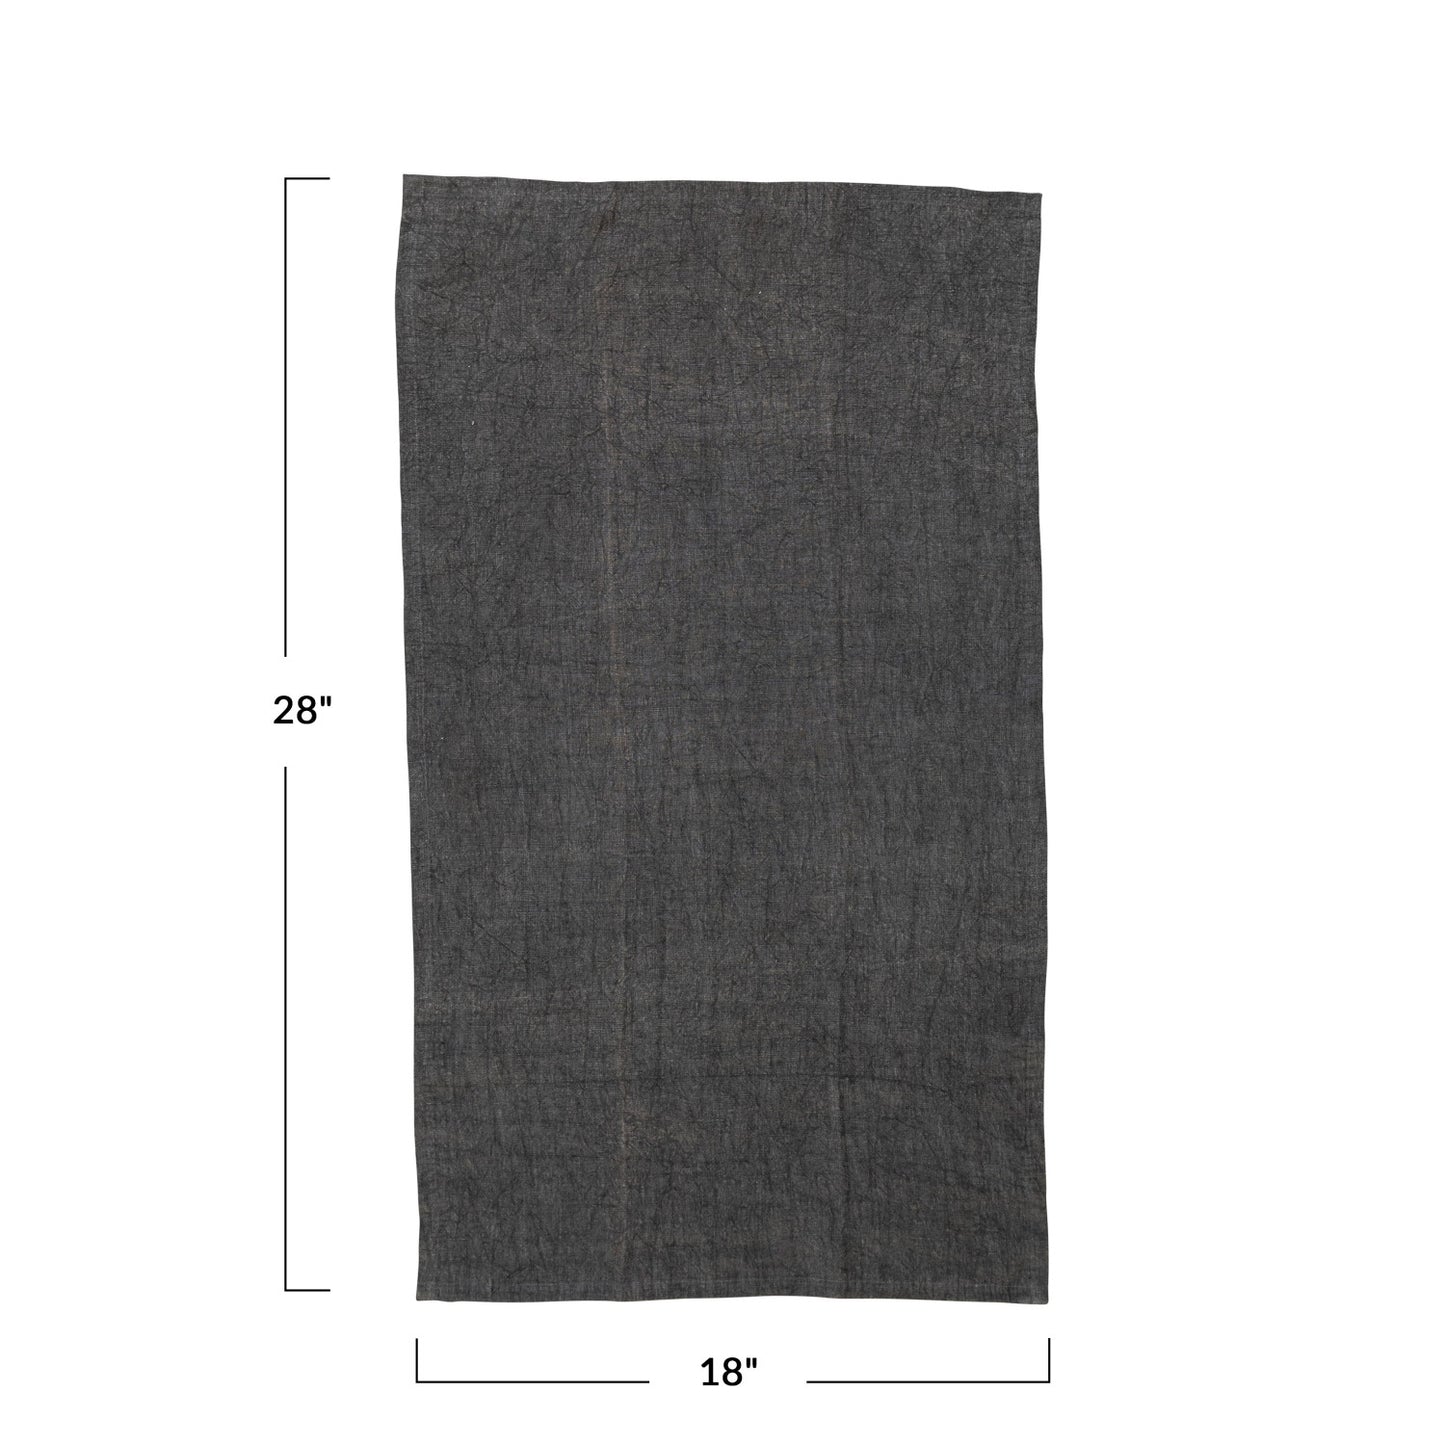 28"L x 18"W Stonewashed Linen Tea Towel